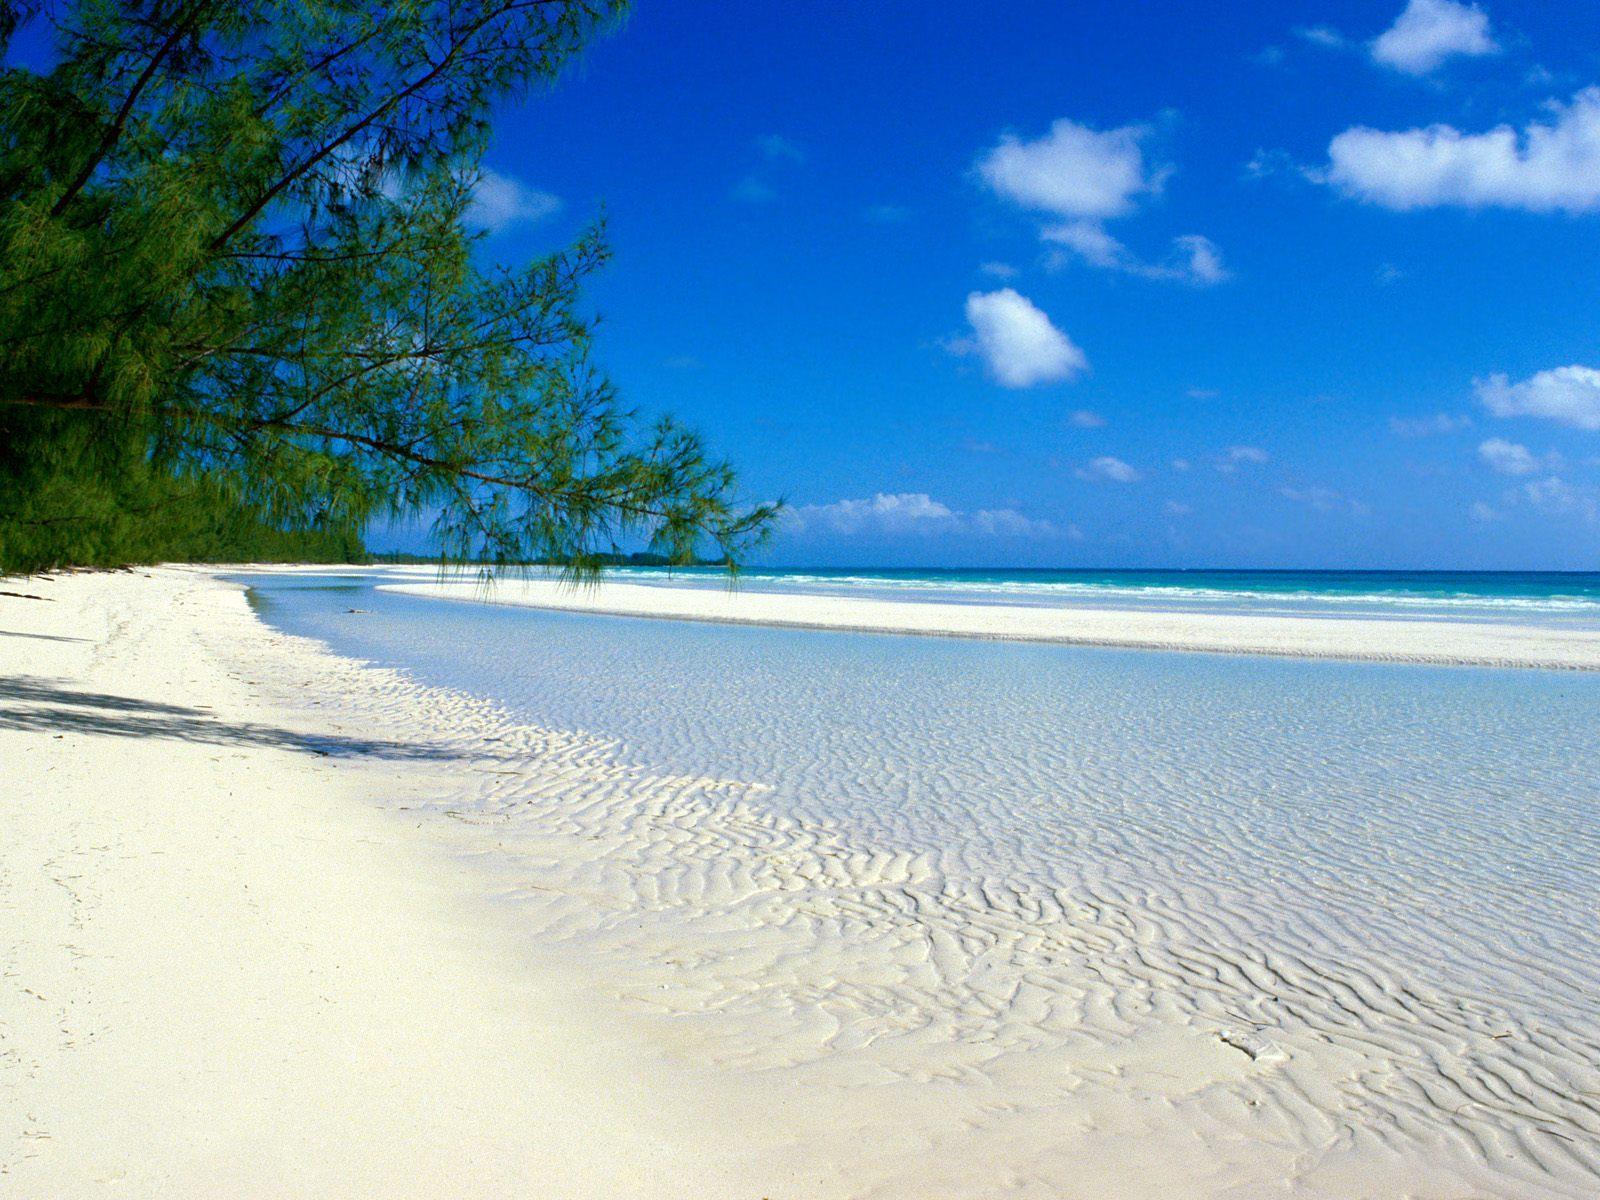 Beach Bahamas free desktop background wallpaper image